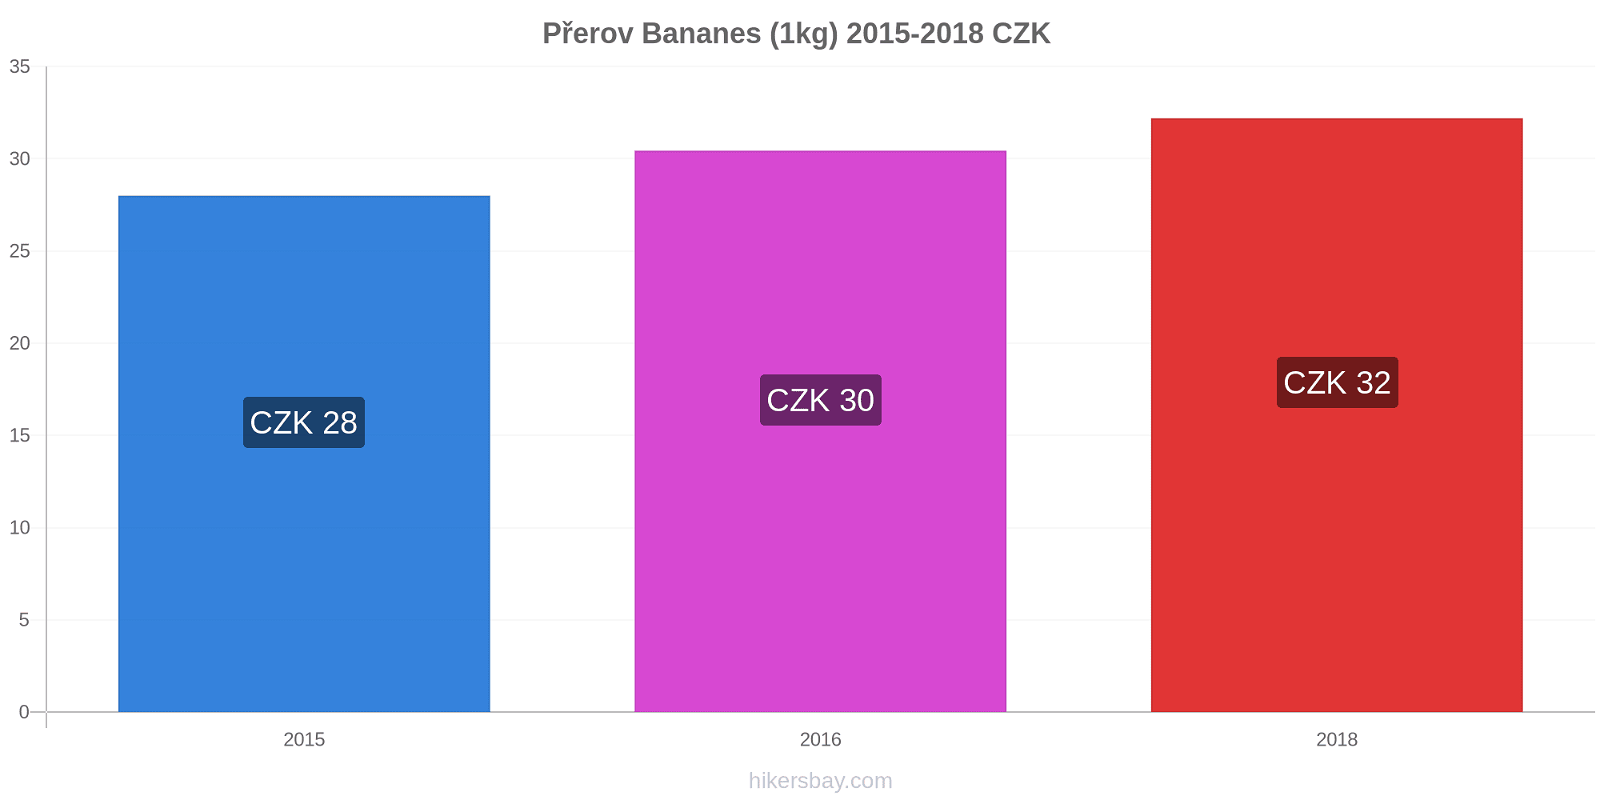 Přerov changements de prix Bananes (1kg) hikersbay.com